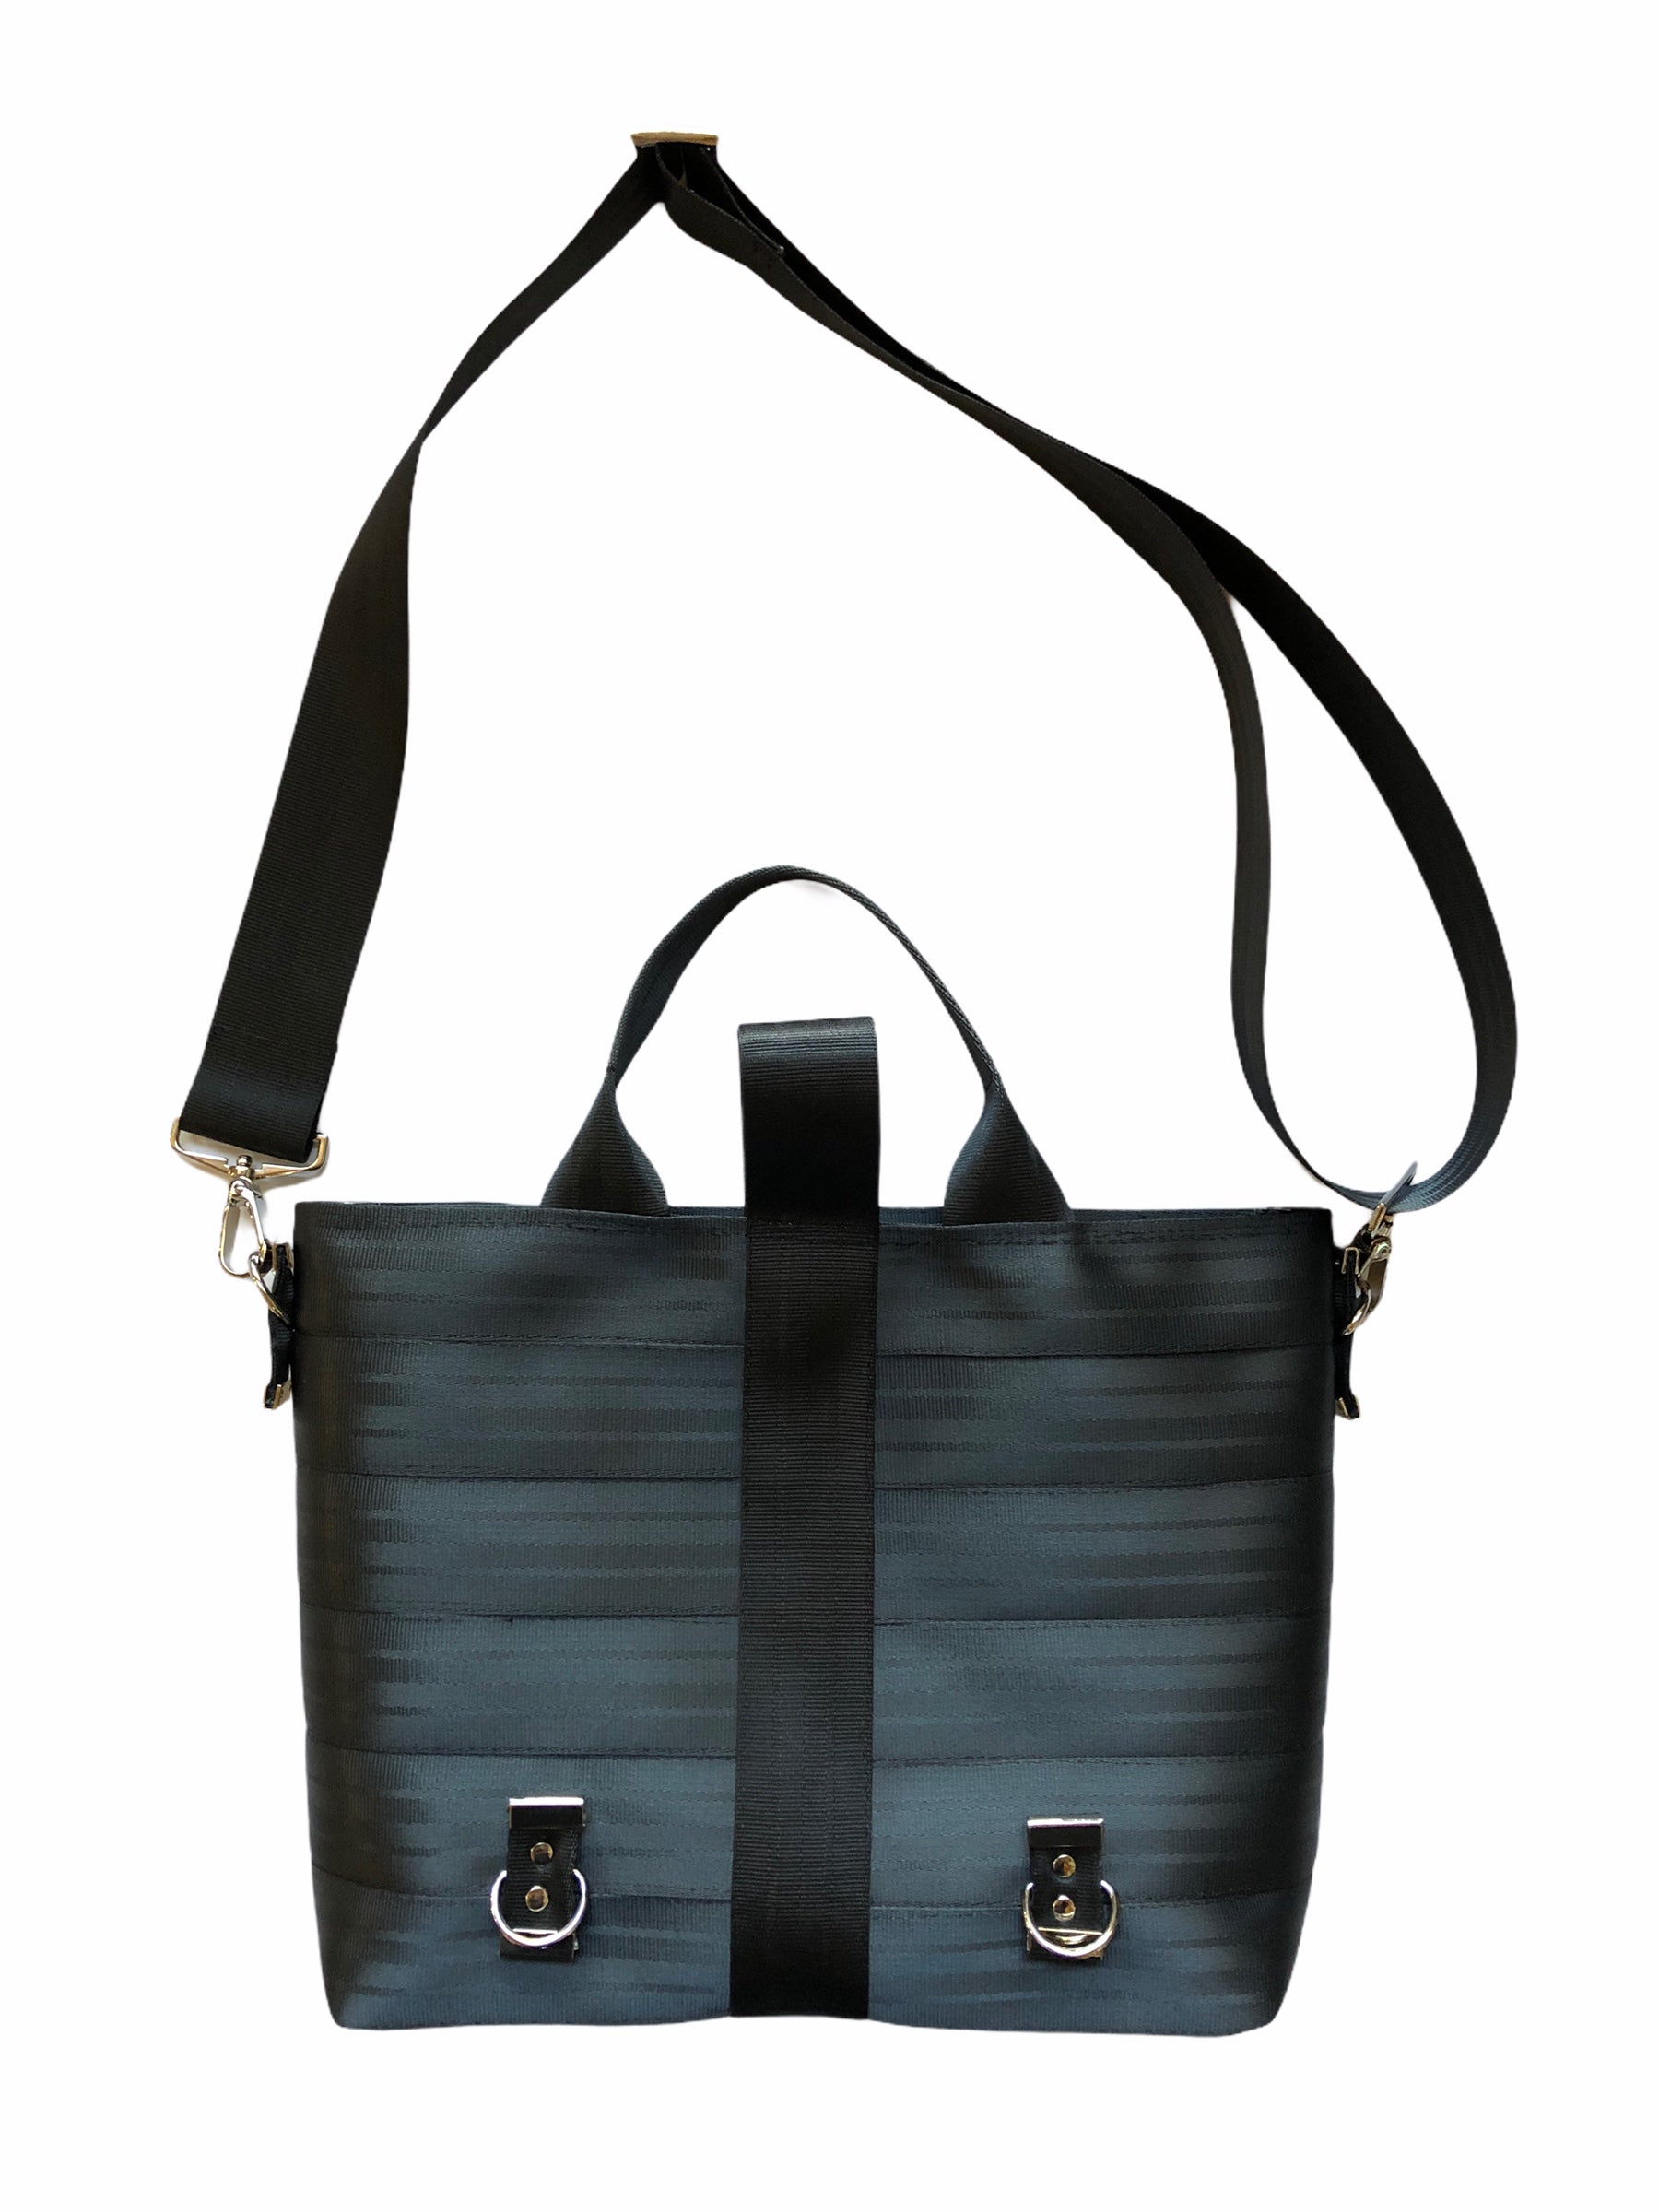 Harvey's The Original Seatbelt Bag/Purse Black EUC | eBay